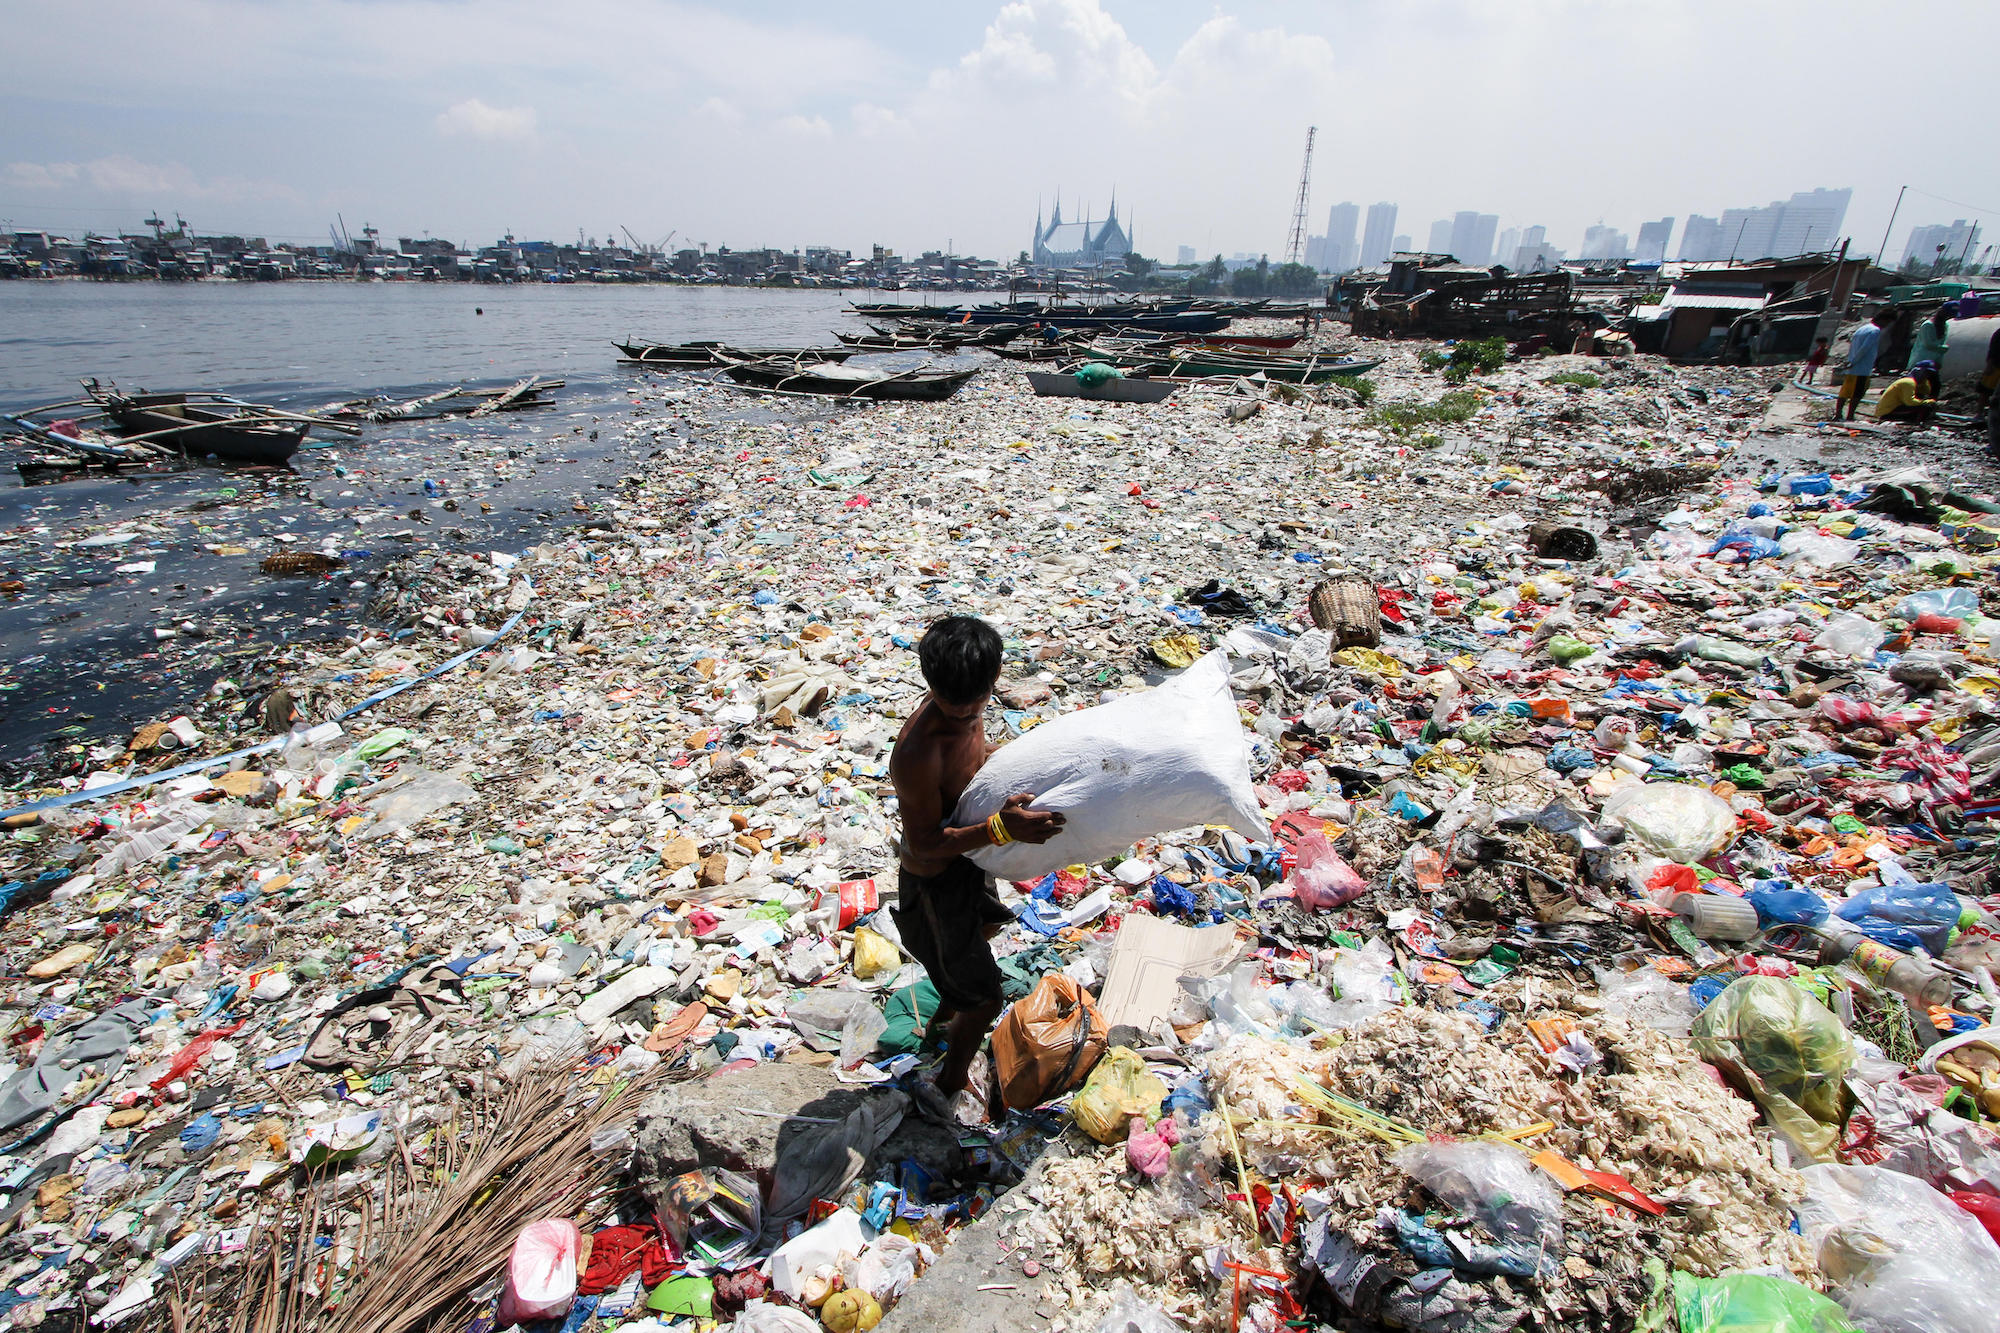 https://images.nationalgeographic.org/image/upload/v1638892207/EducationHub/photos/recyclable-waste-philippines.jpg